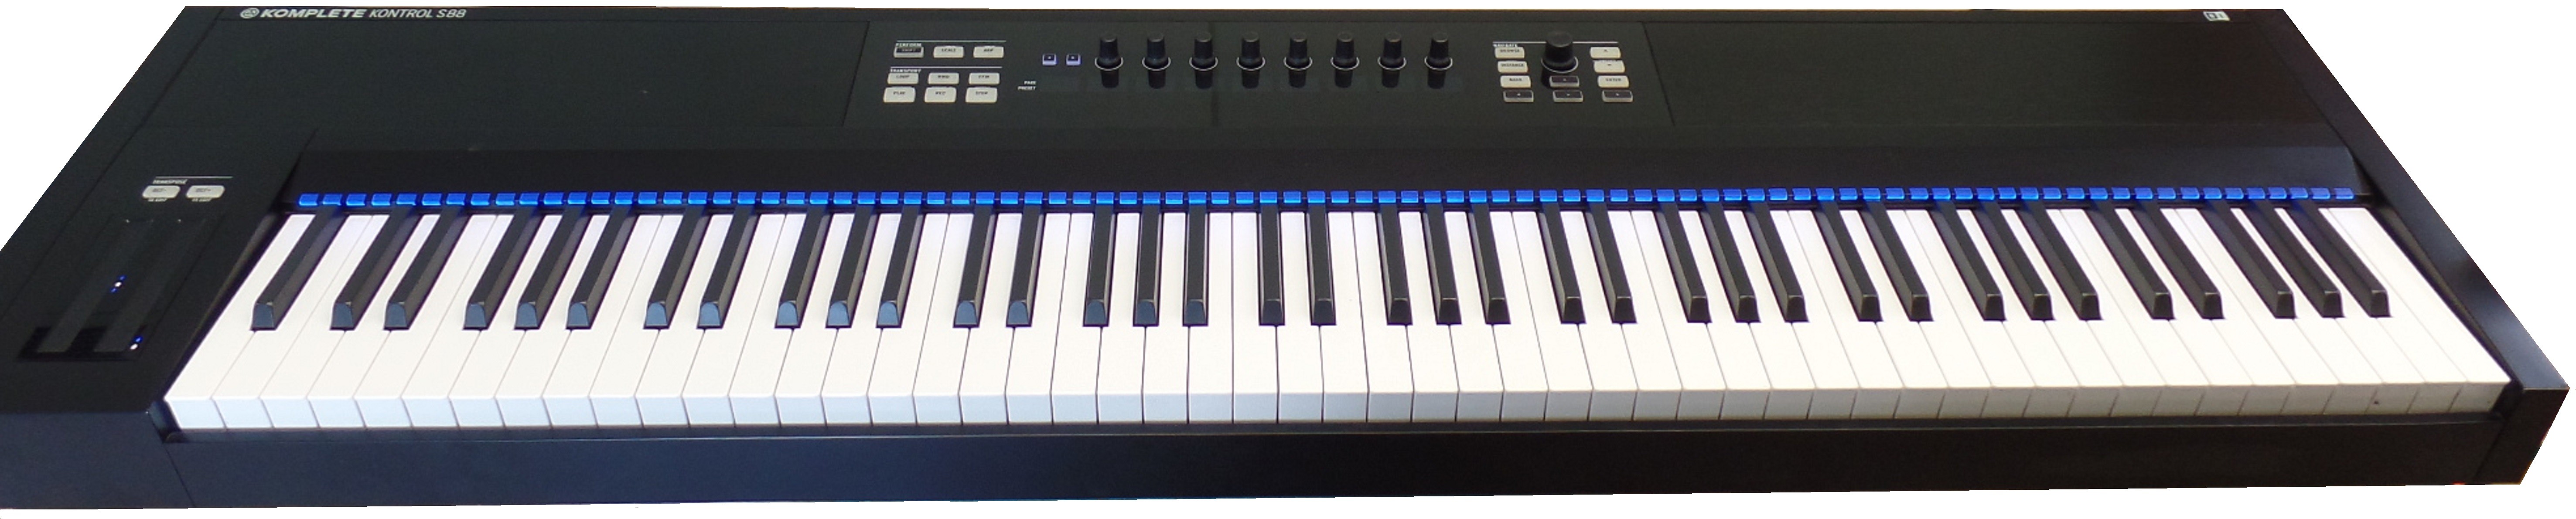 Native Instruments Komplete Kontrol S88 - MIDI Controller